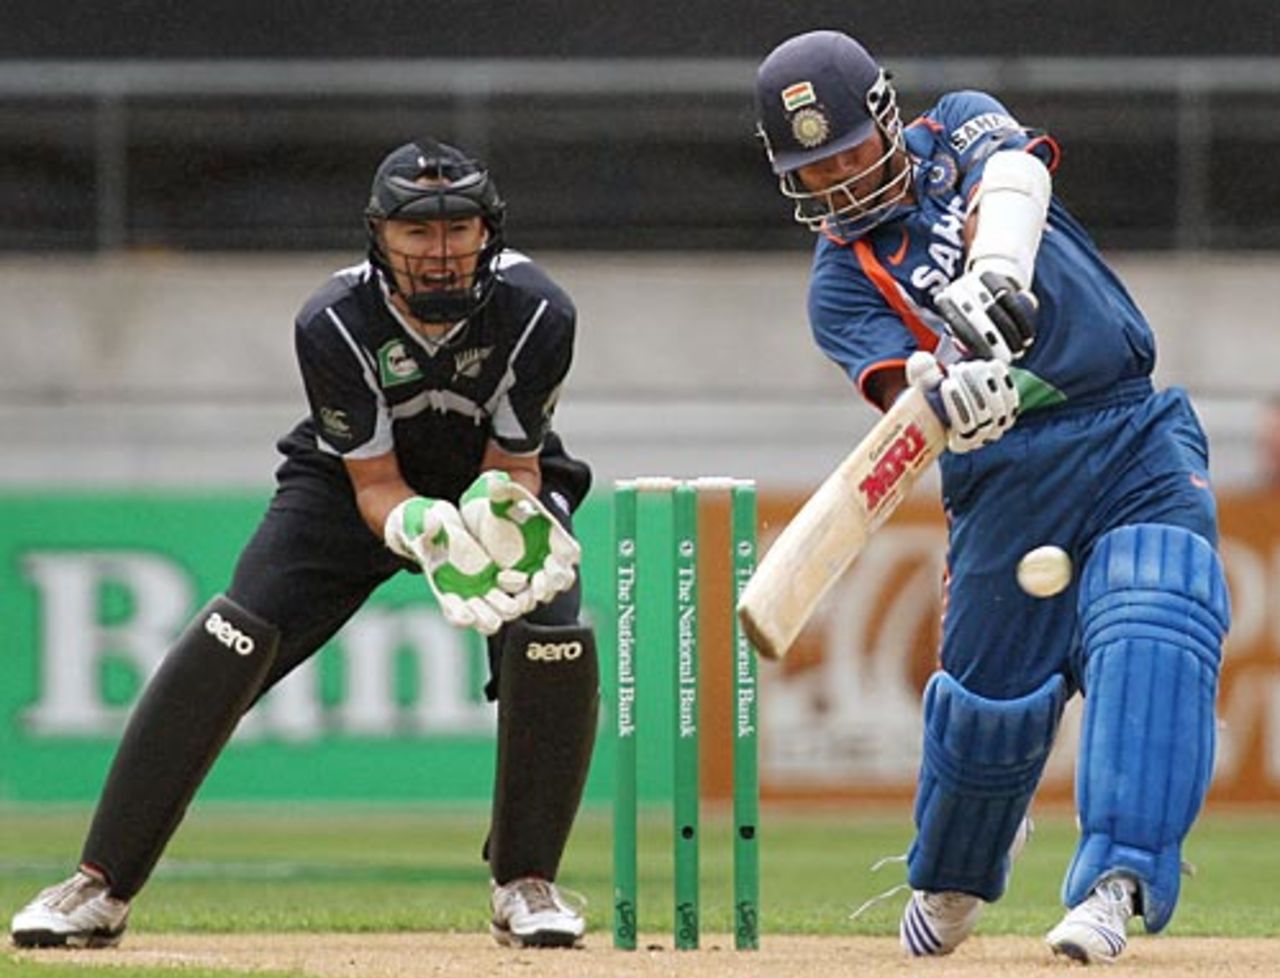 Sachin Tendulkar hits over the top, New Zealand v India, 2nd ODI, Westpac Stadium, Wellington, March 6, 2009